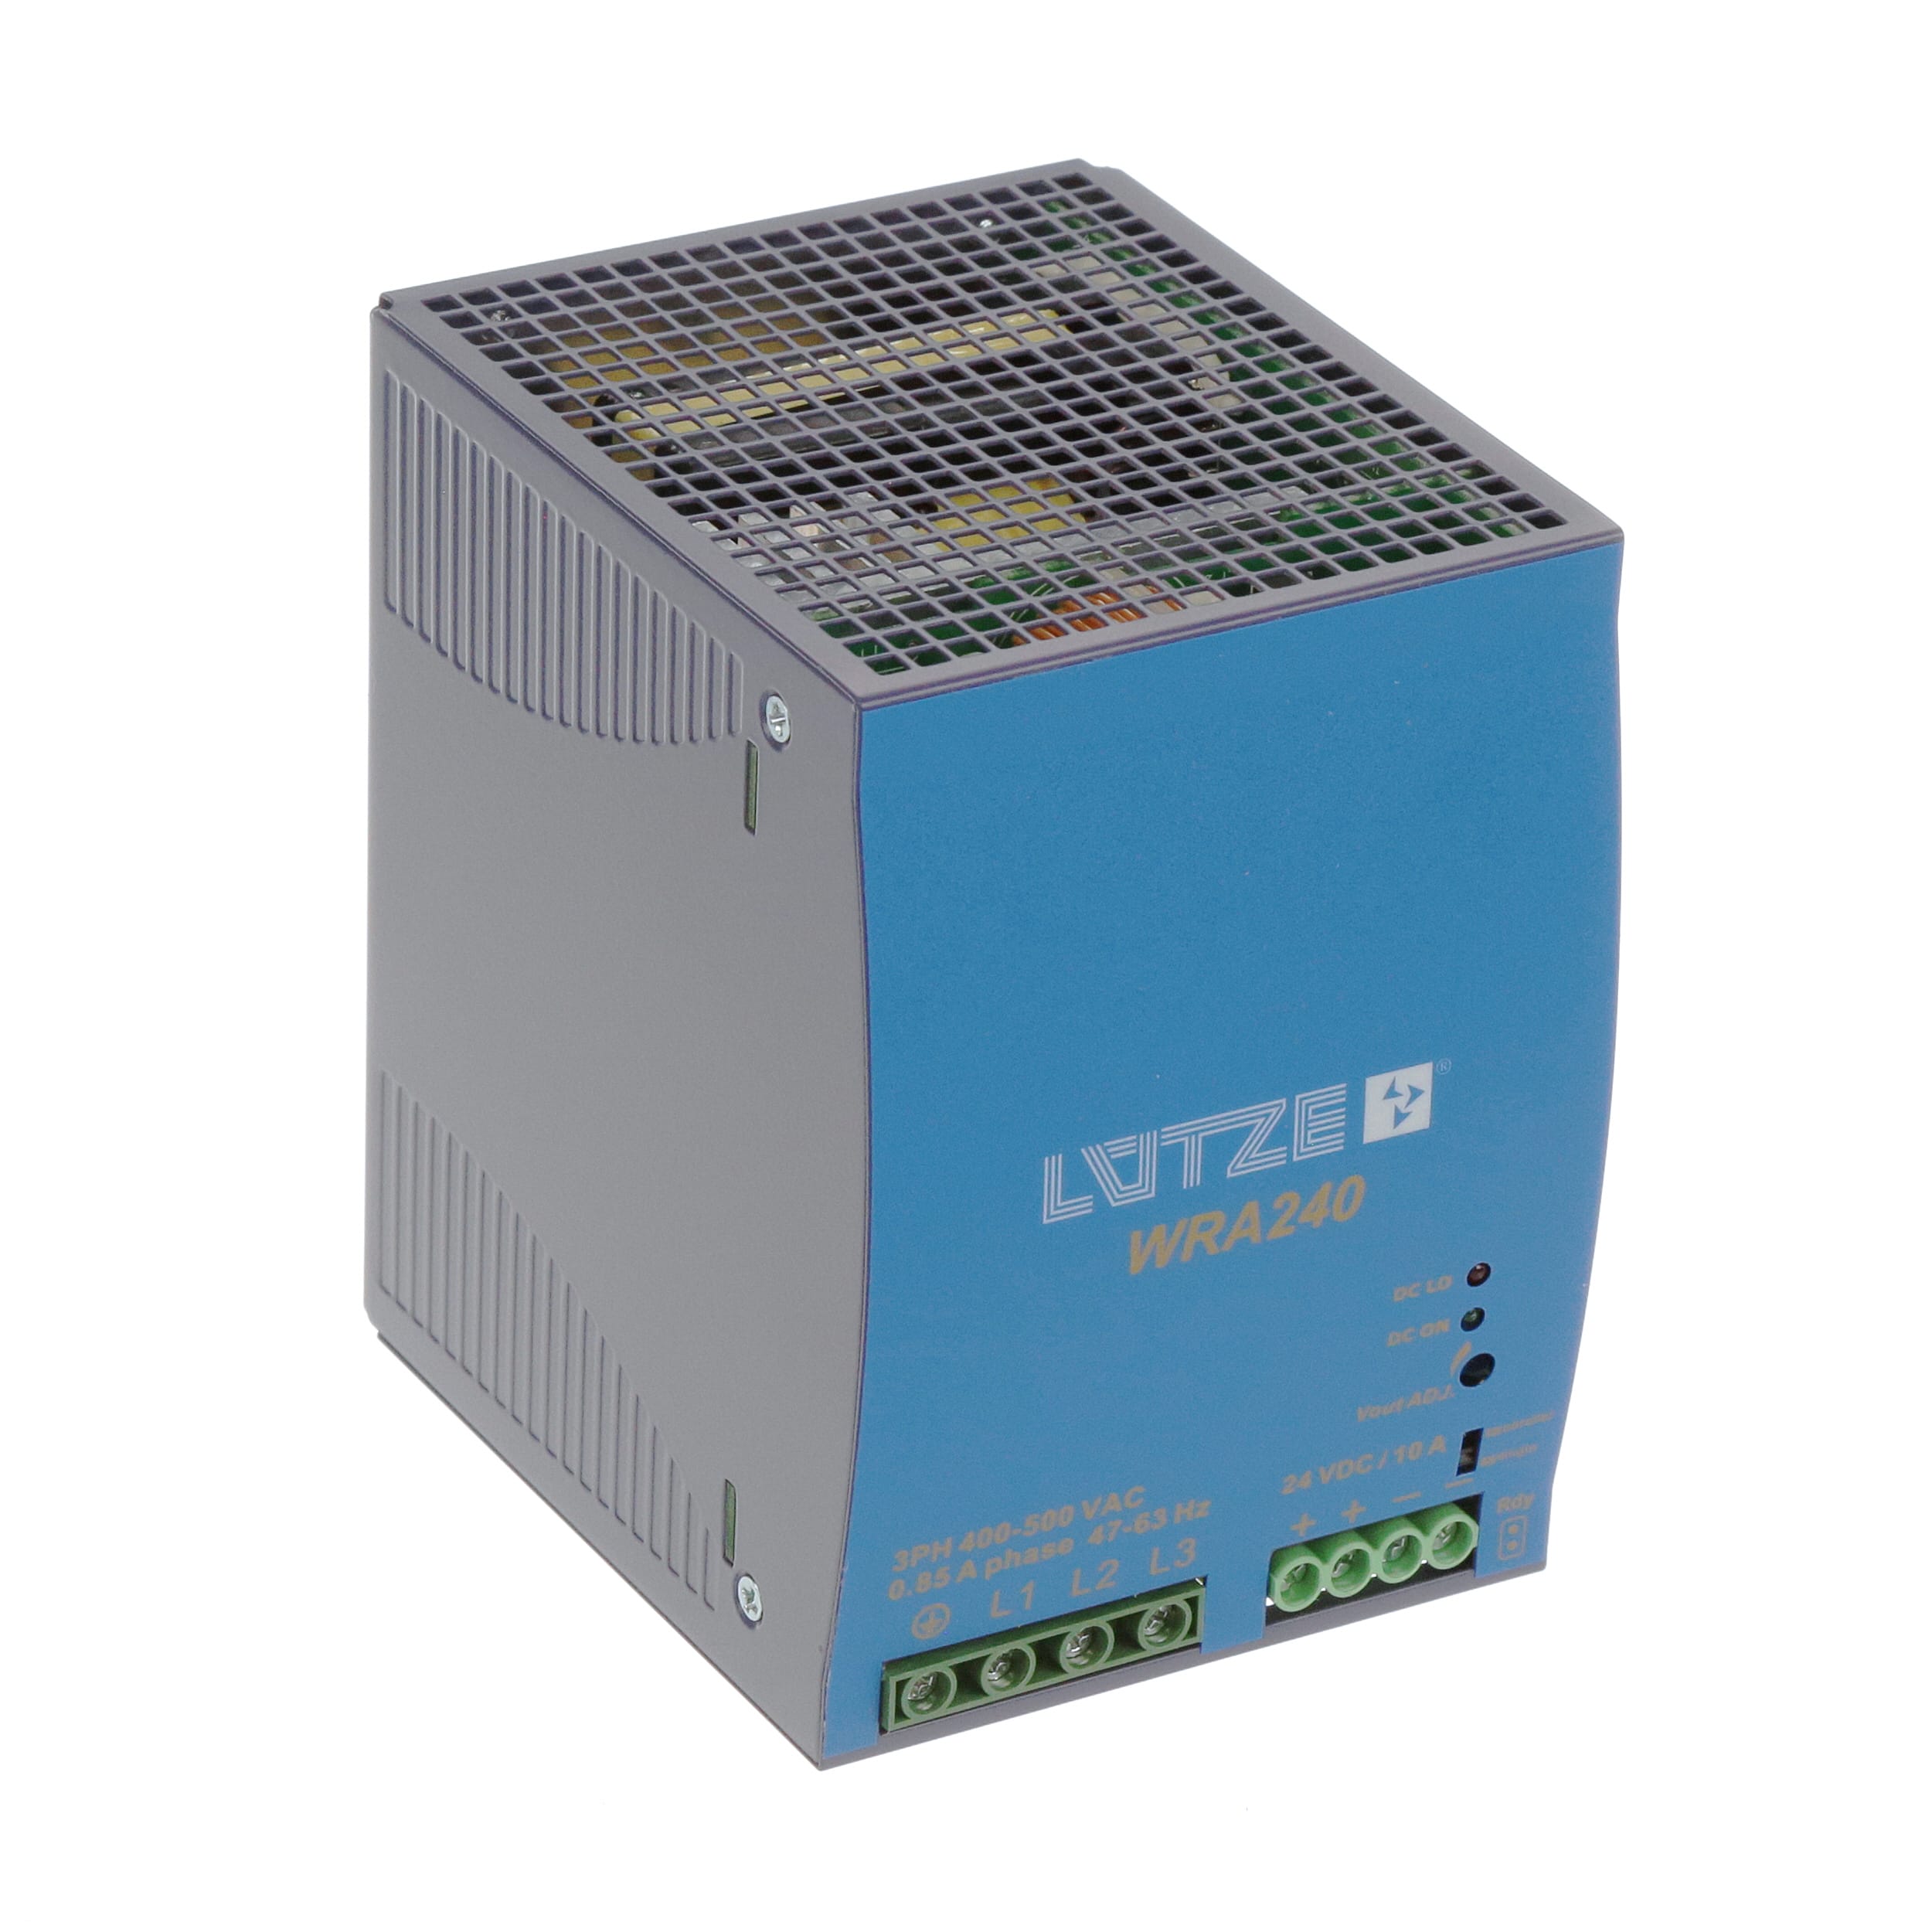 LUTZE Inc. - 722804 - Power Supply, WRA240-24, 3-Phase 240W, 24V 